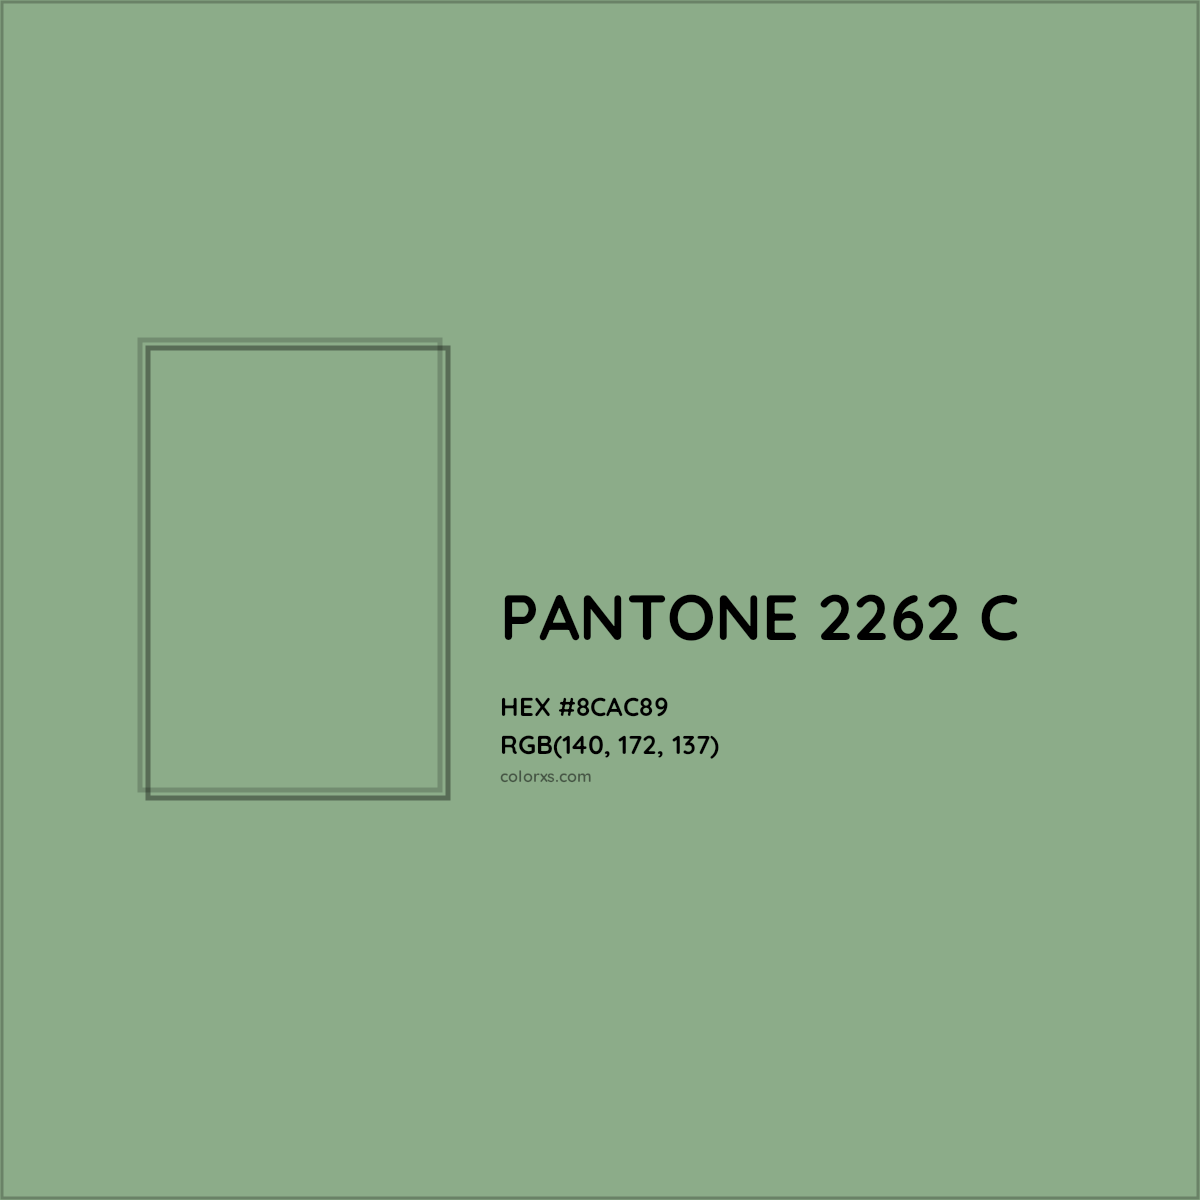 HEX #8CAC89 PANTONE 2262 C CMS Pantone PMS - Color Code